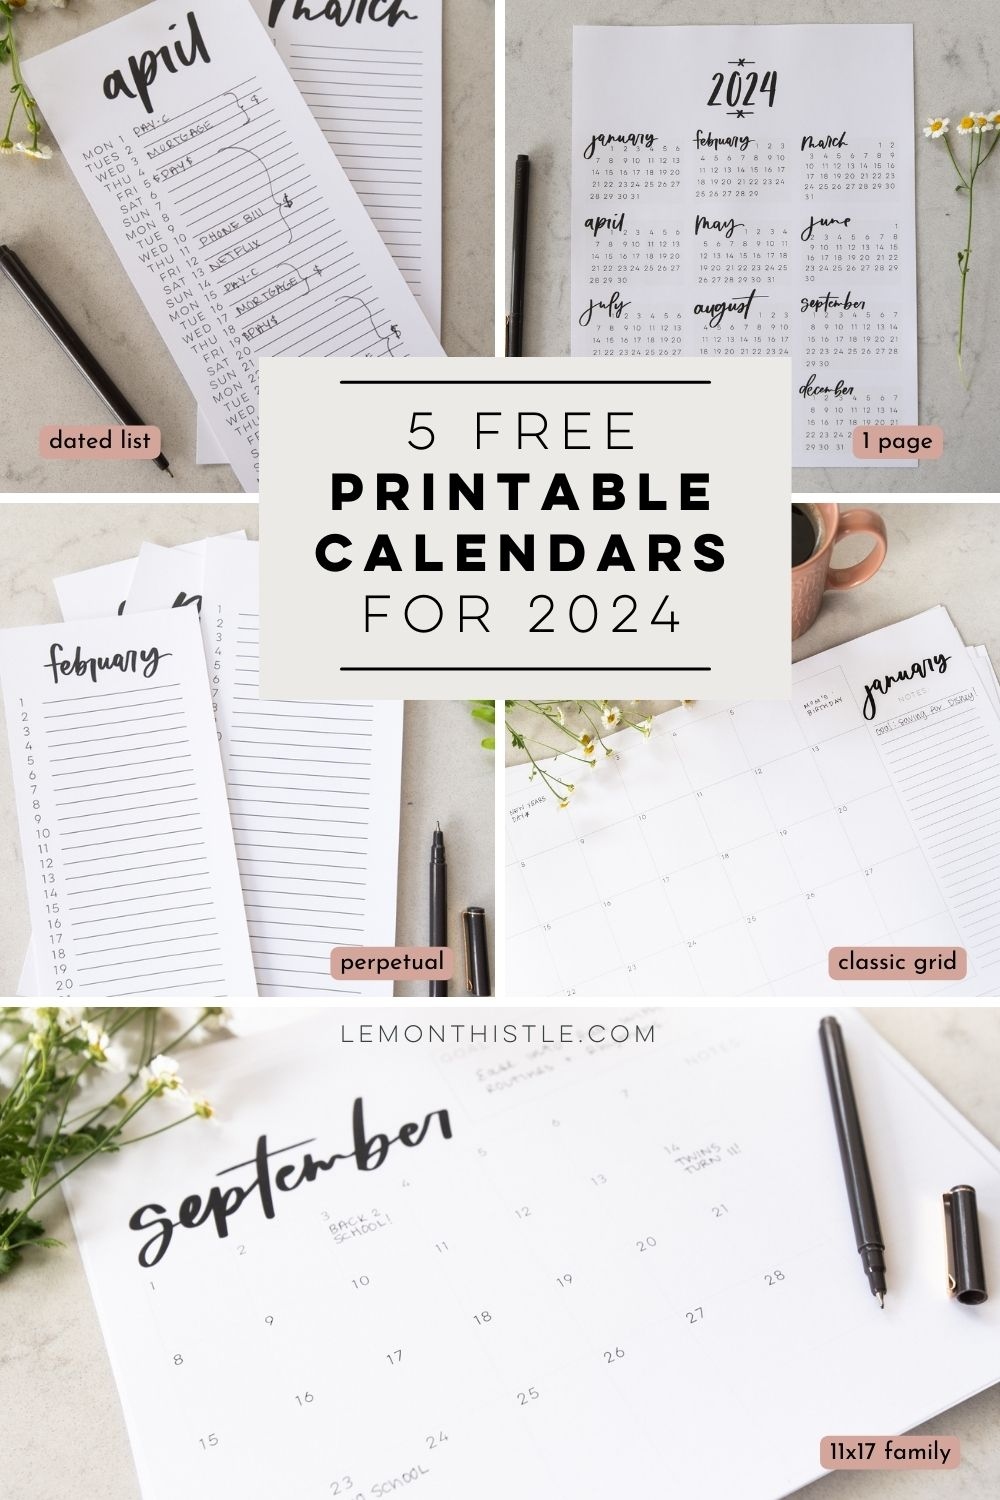 Free Printable Calendars 2024 - Lemon Thistle intended for Free Printable Calendar 2024 I Can Write On